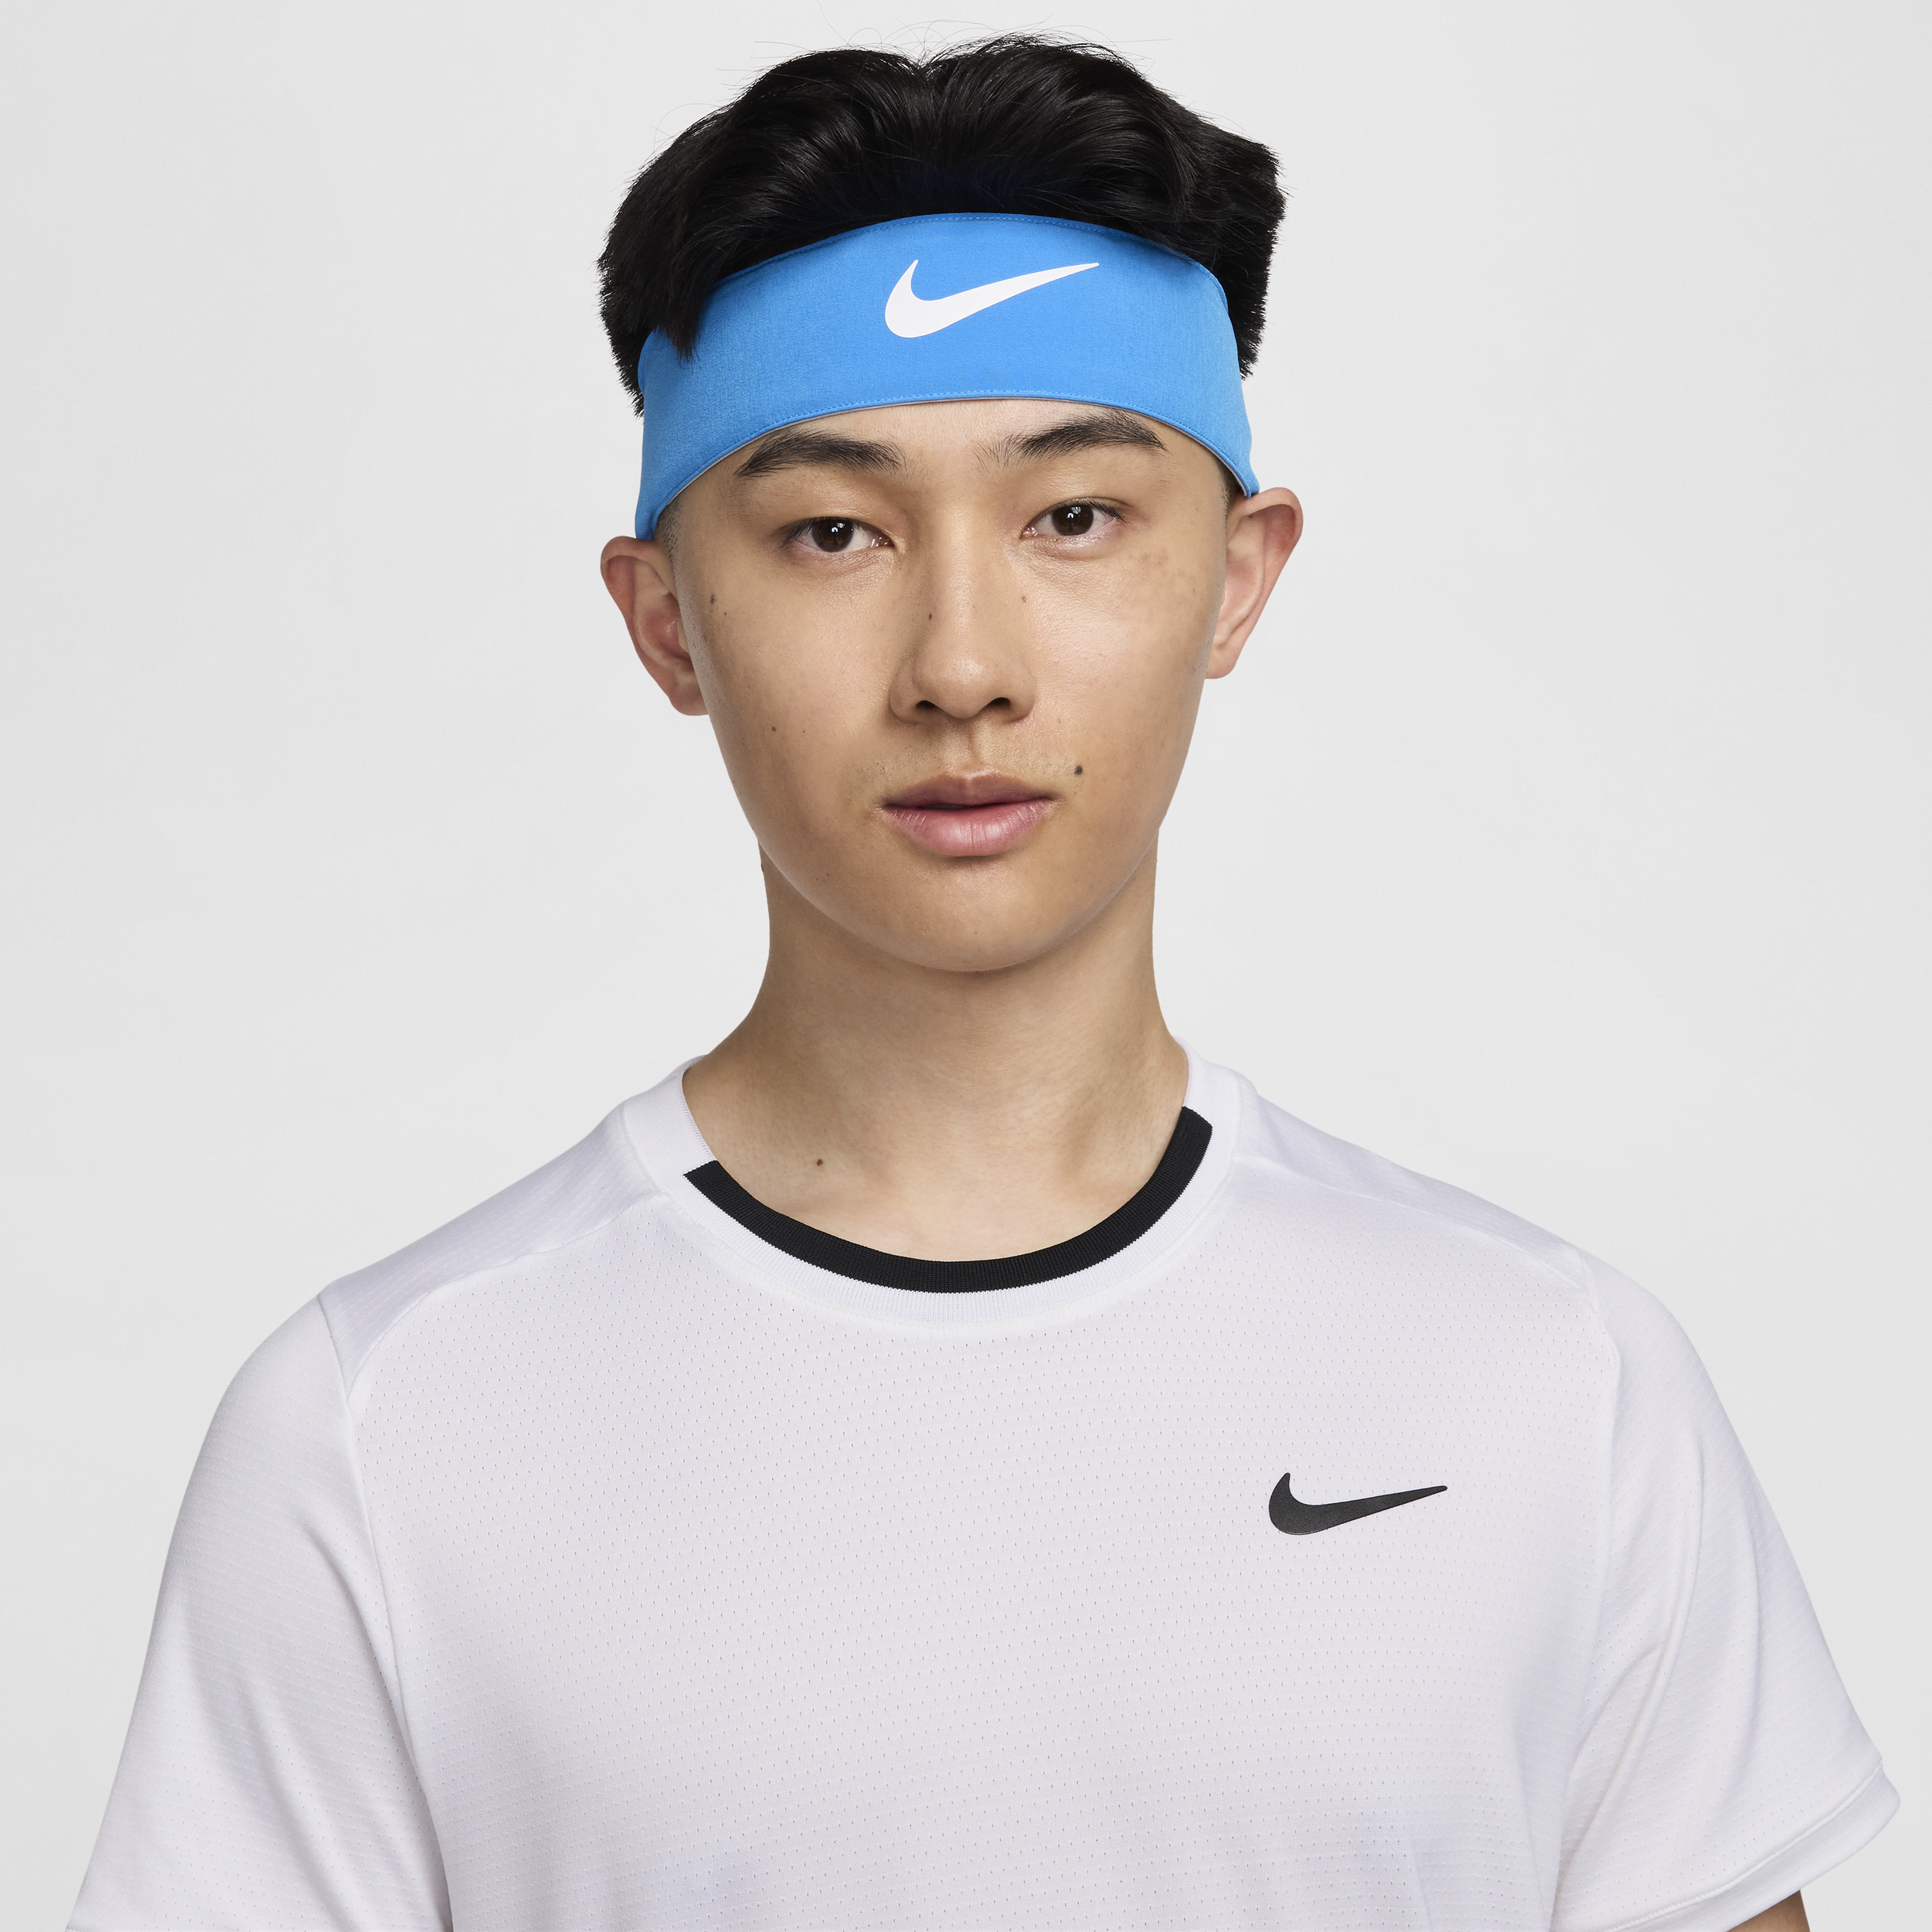 NikeCourt Cinta para el pelo de tenis - Azul